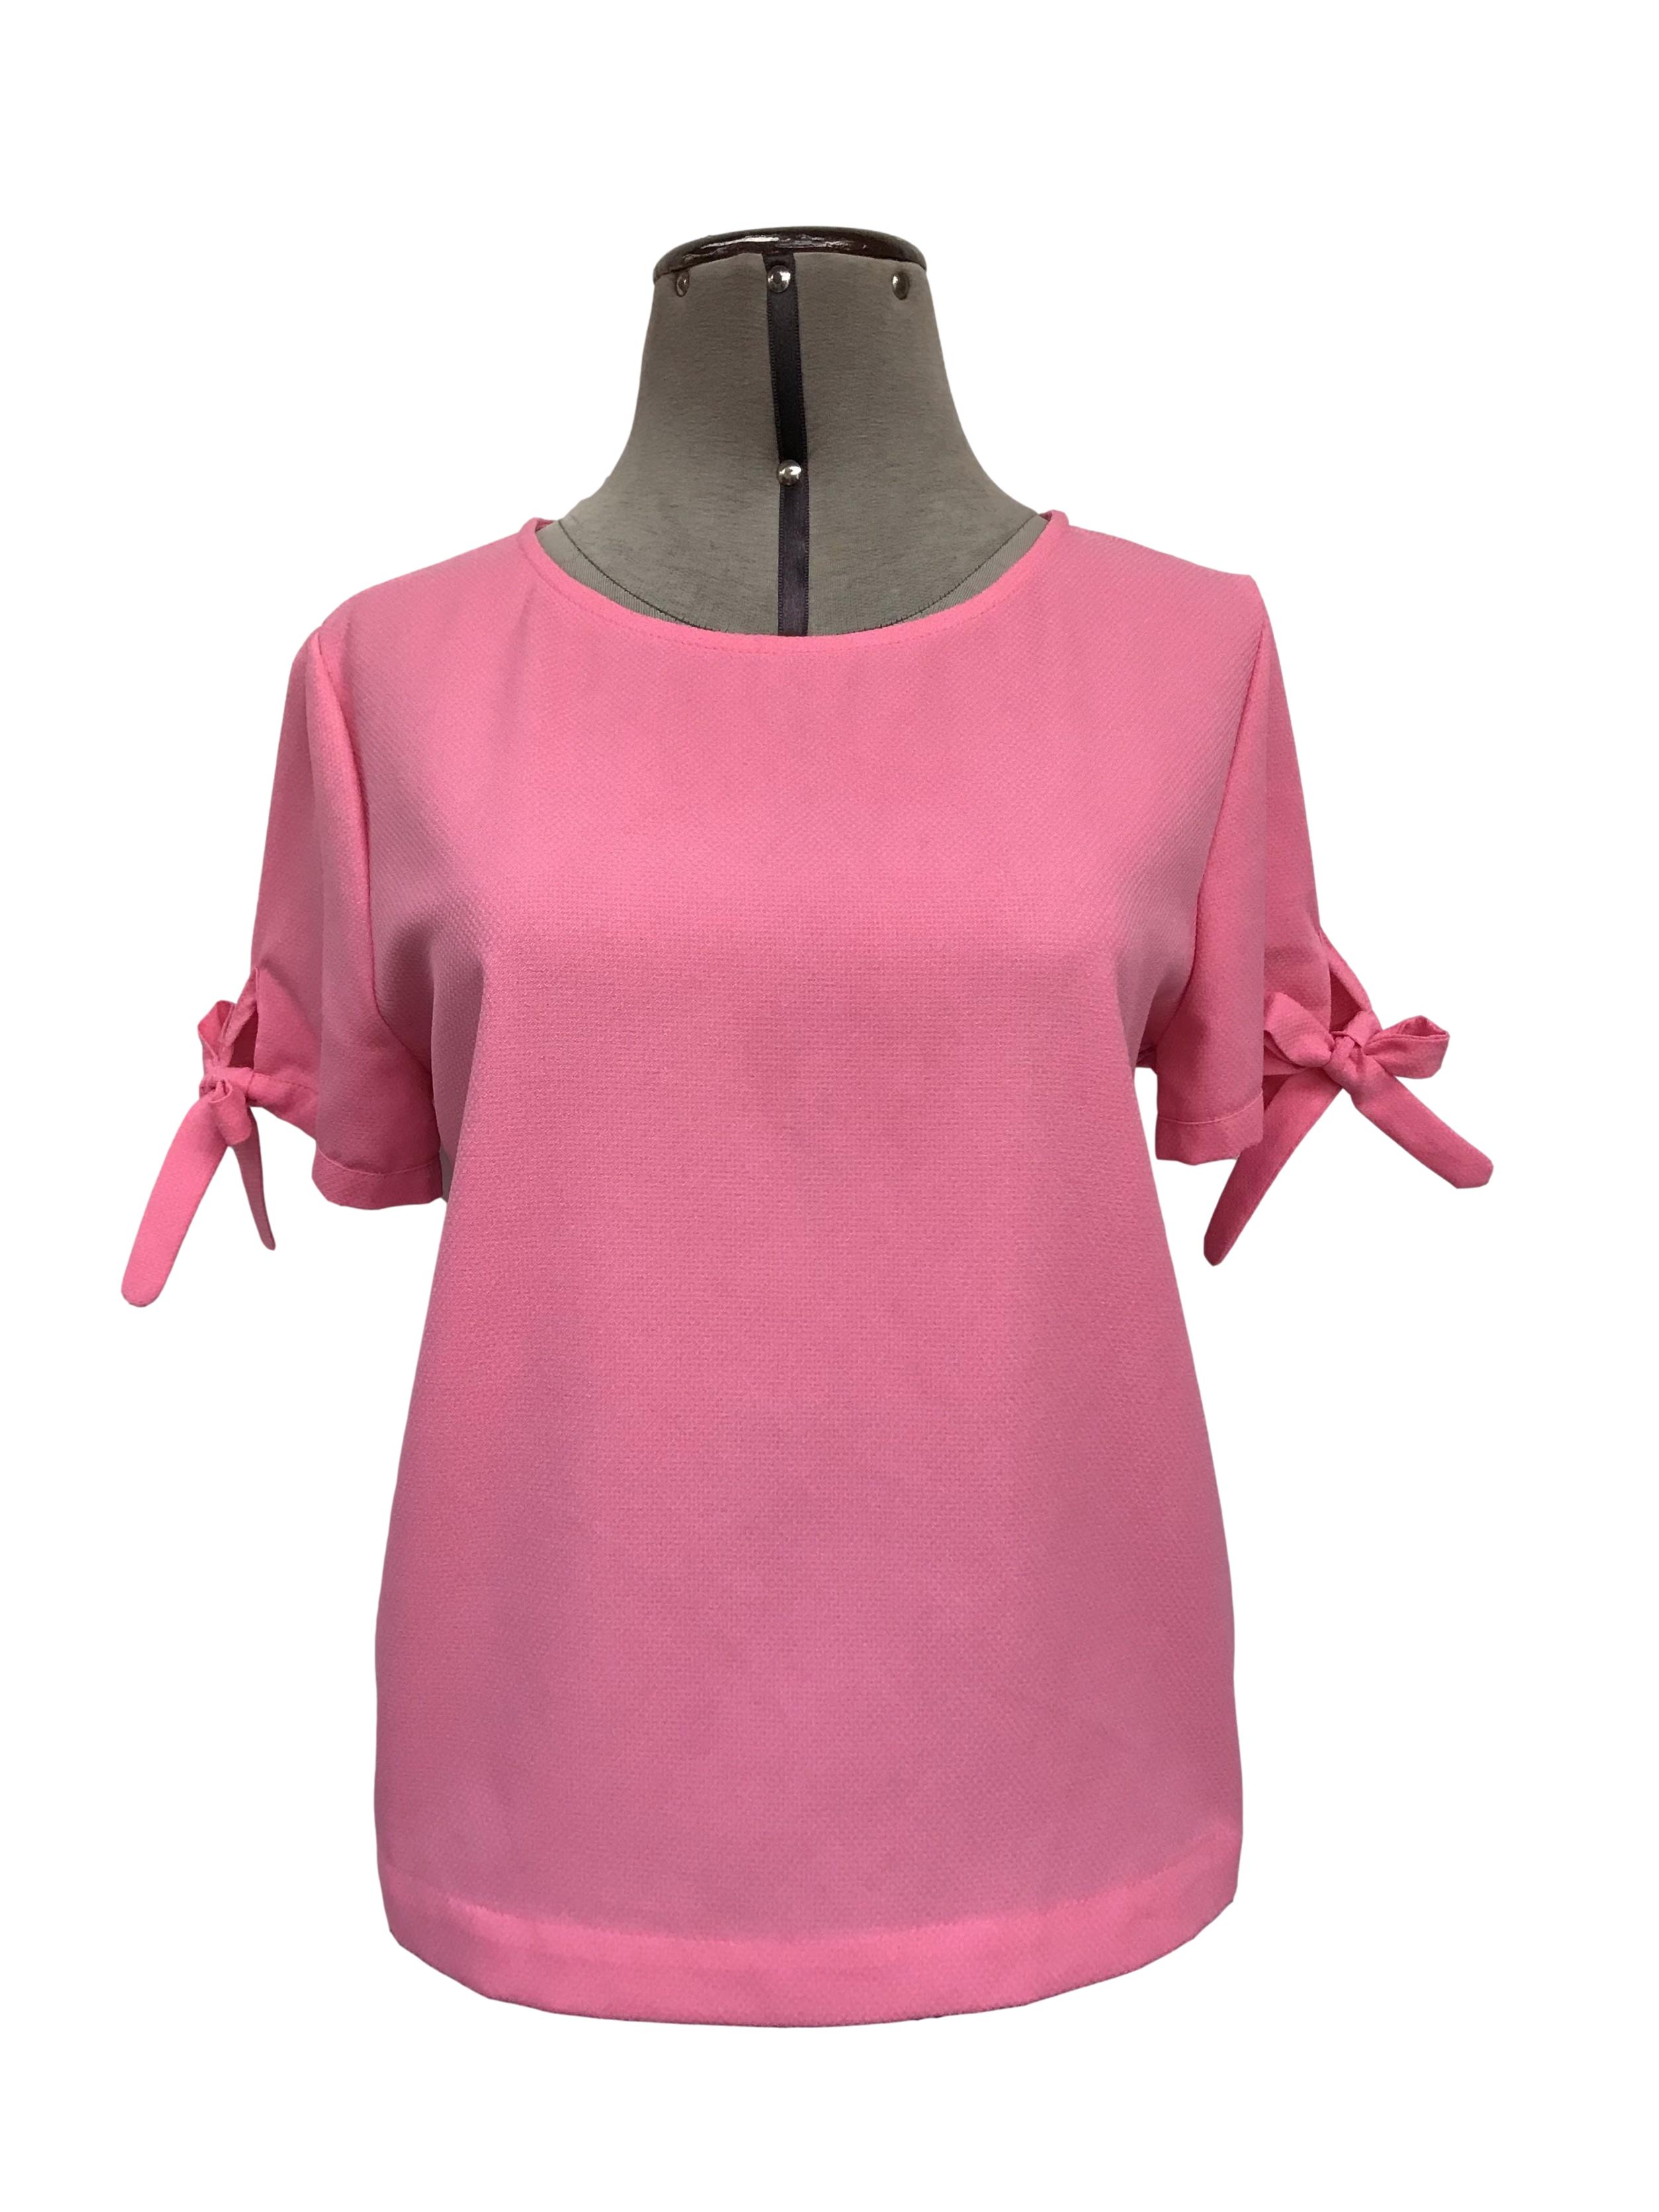 Blusa Forever21 rosa con textura tipo crepé, con lacitos para amarrar en las mangas
Talla M